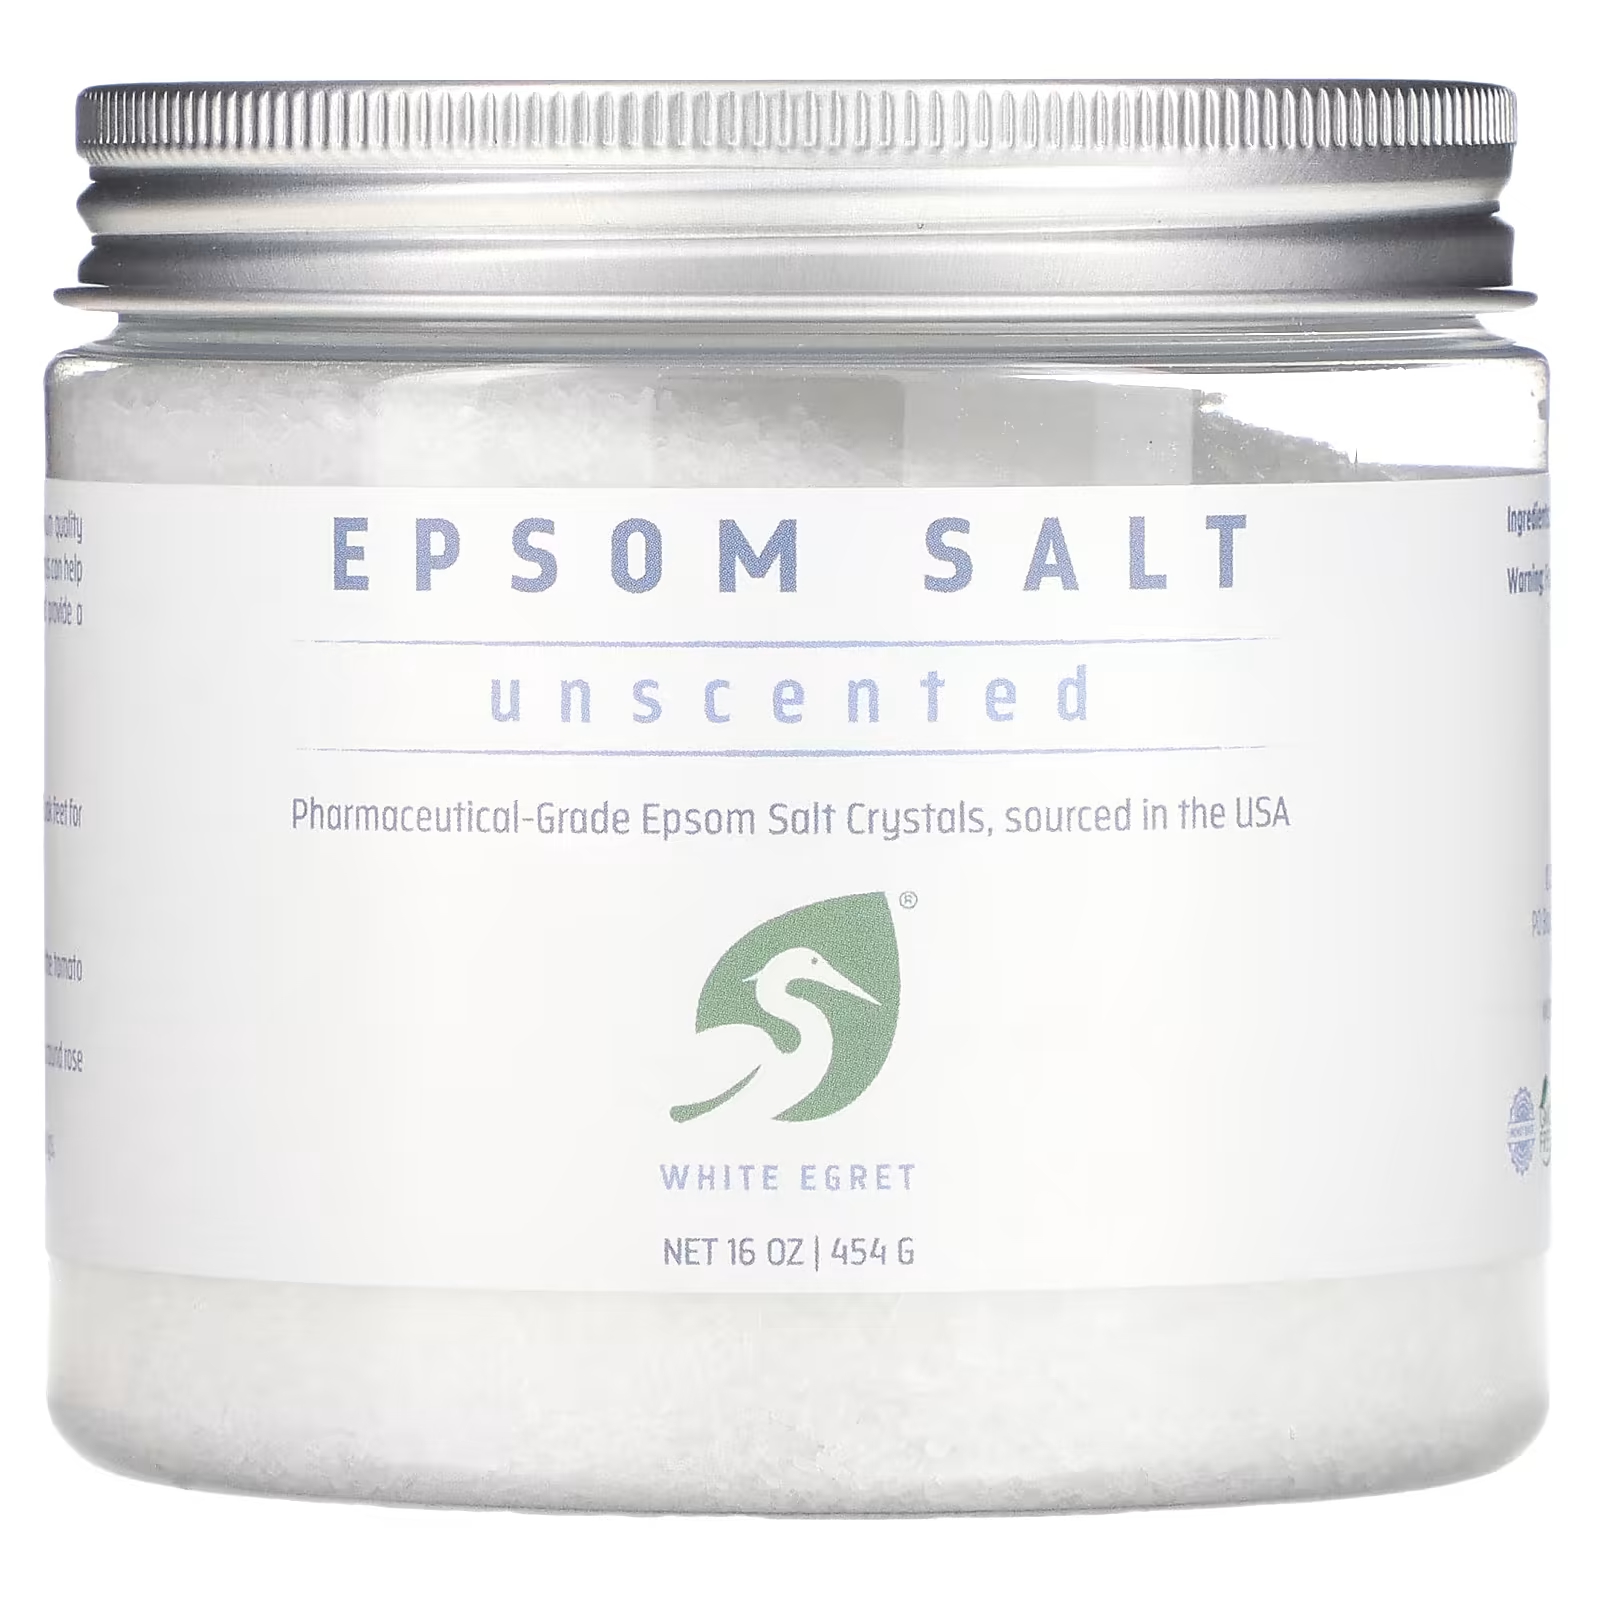 Соль для ванны White Egret Personal Care Epsom Salt без запаха, 454 г white egret personal care универсальный набор для свечки ушей пчелиный воск 4 шт